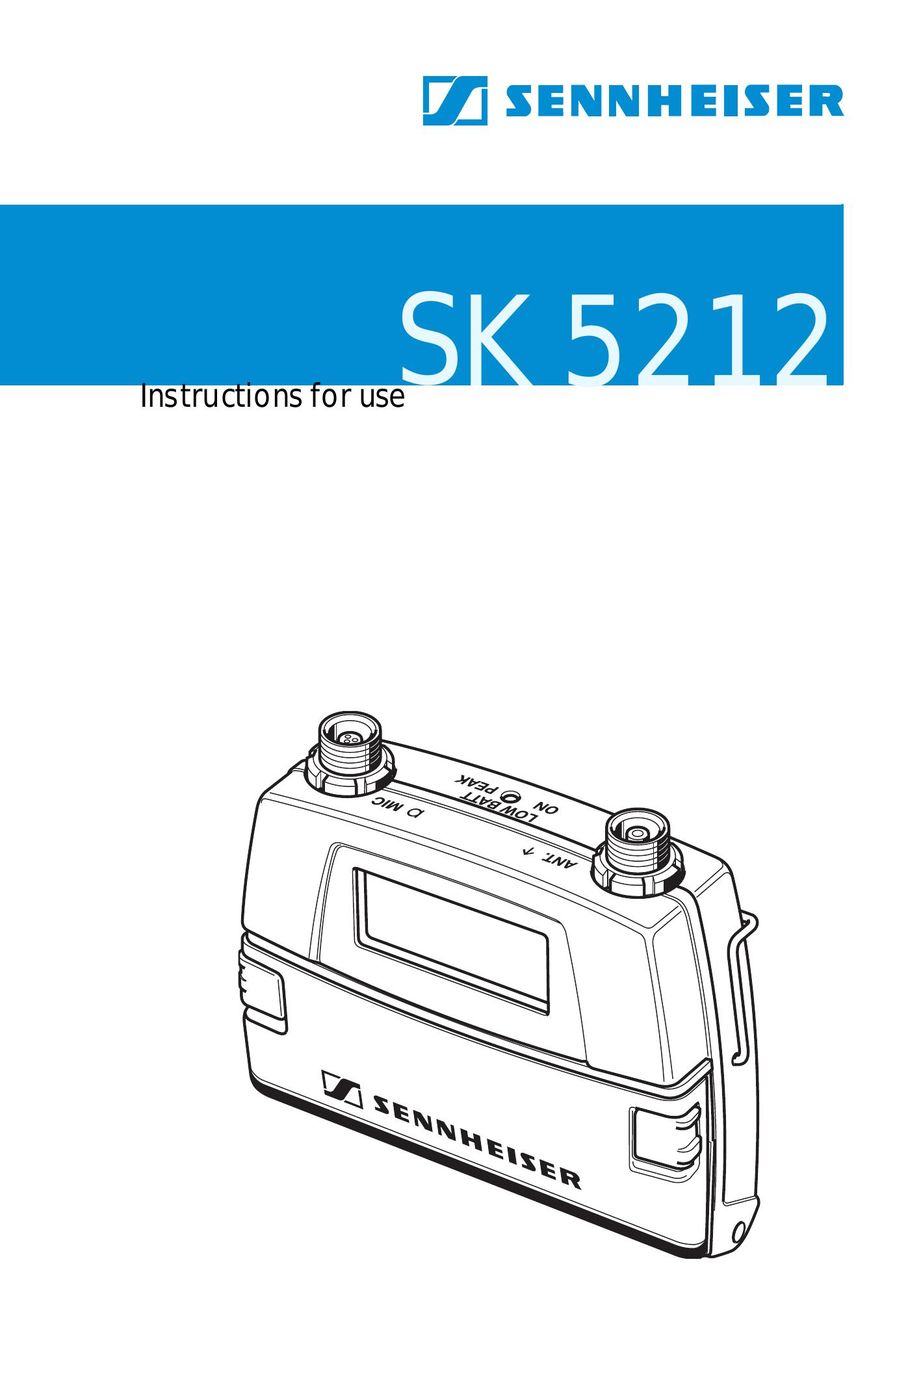 Sennheiser SK 5212 Satellite Radio User Manual